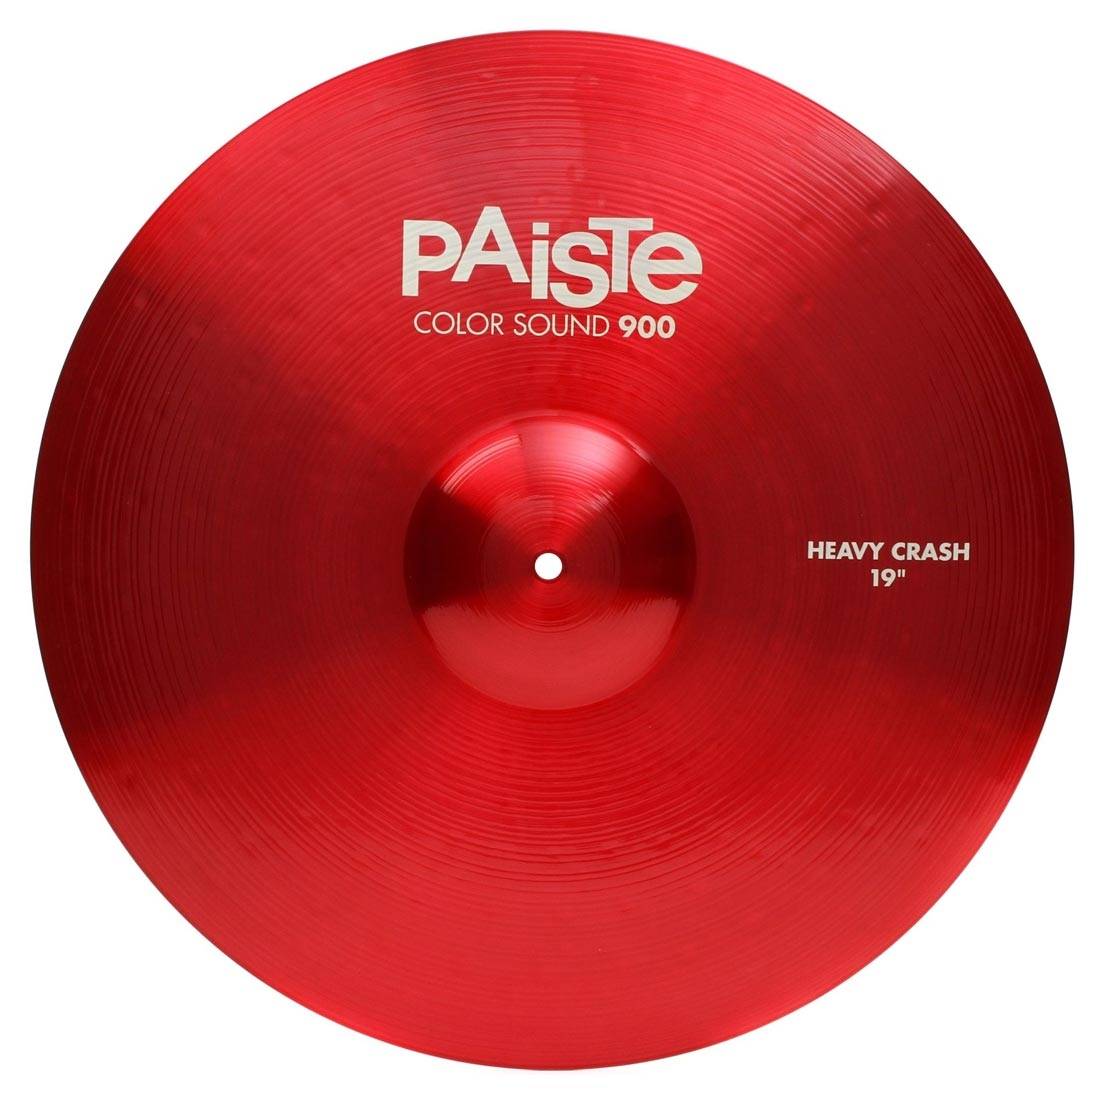 PAISTE 900 Color Sound 19'' Red Heavy Crash